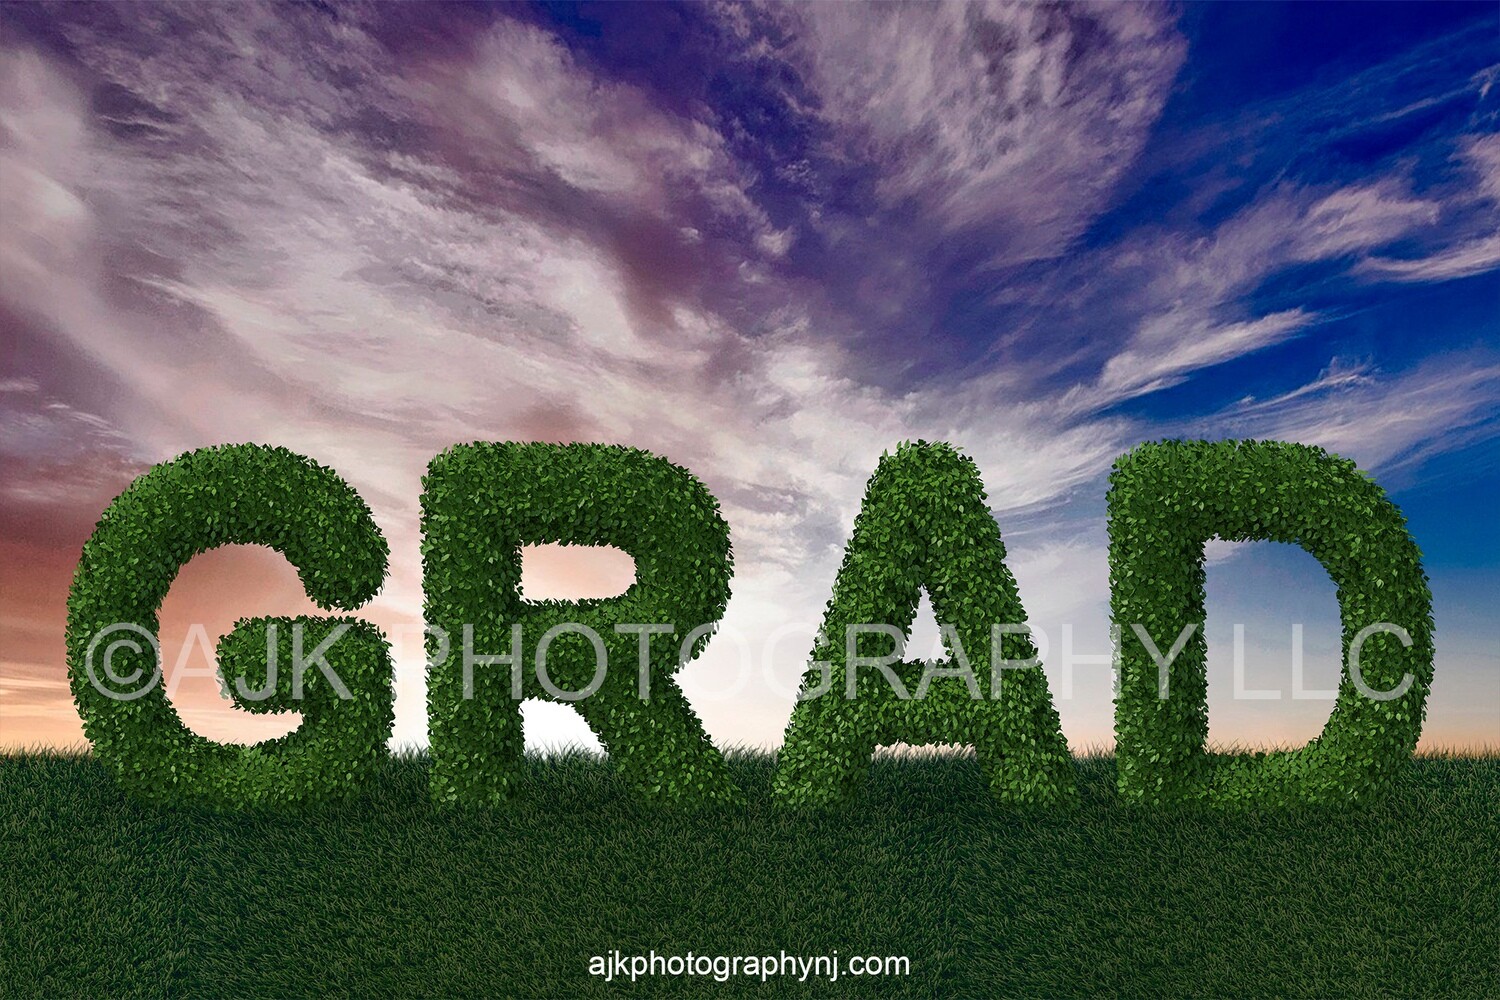 Giant bush letters spelling GRAD in grassy field and blue sky, Graduation digital backdrop